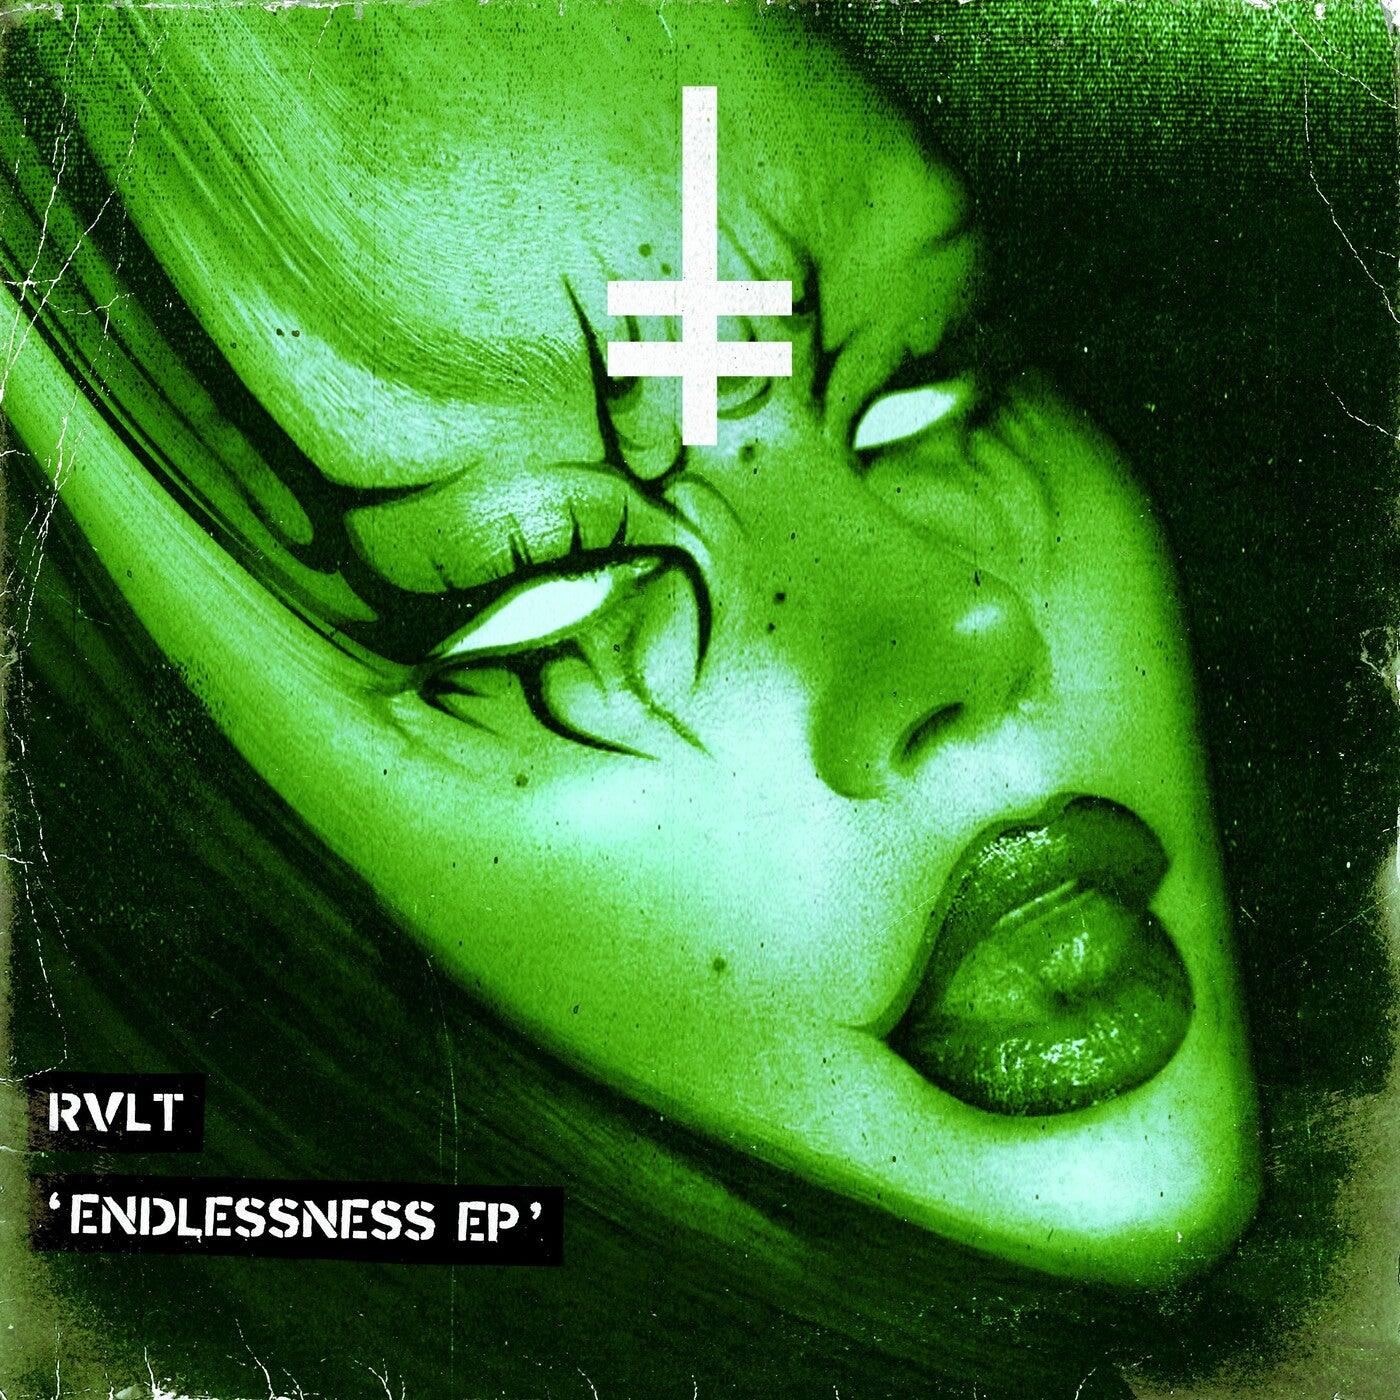 Endlessness EP